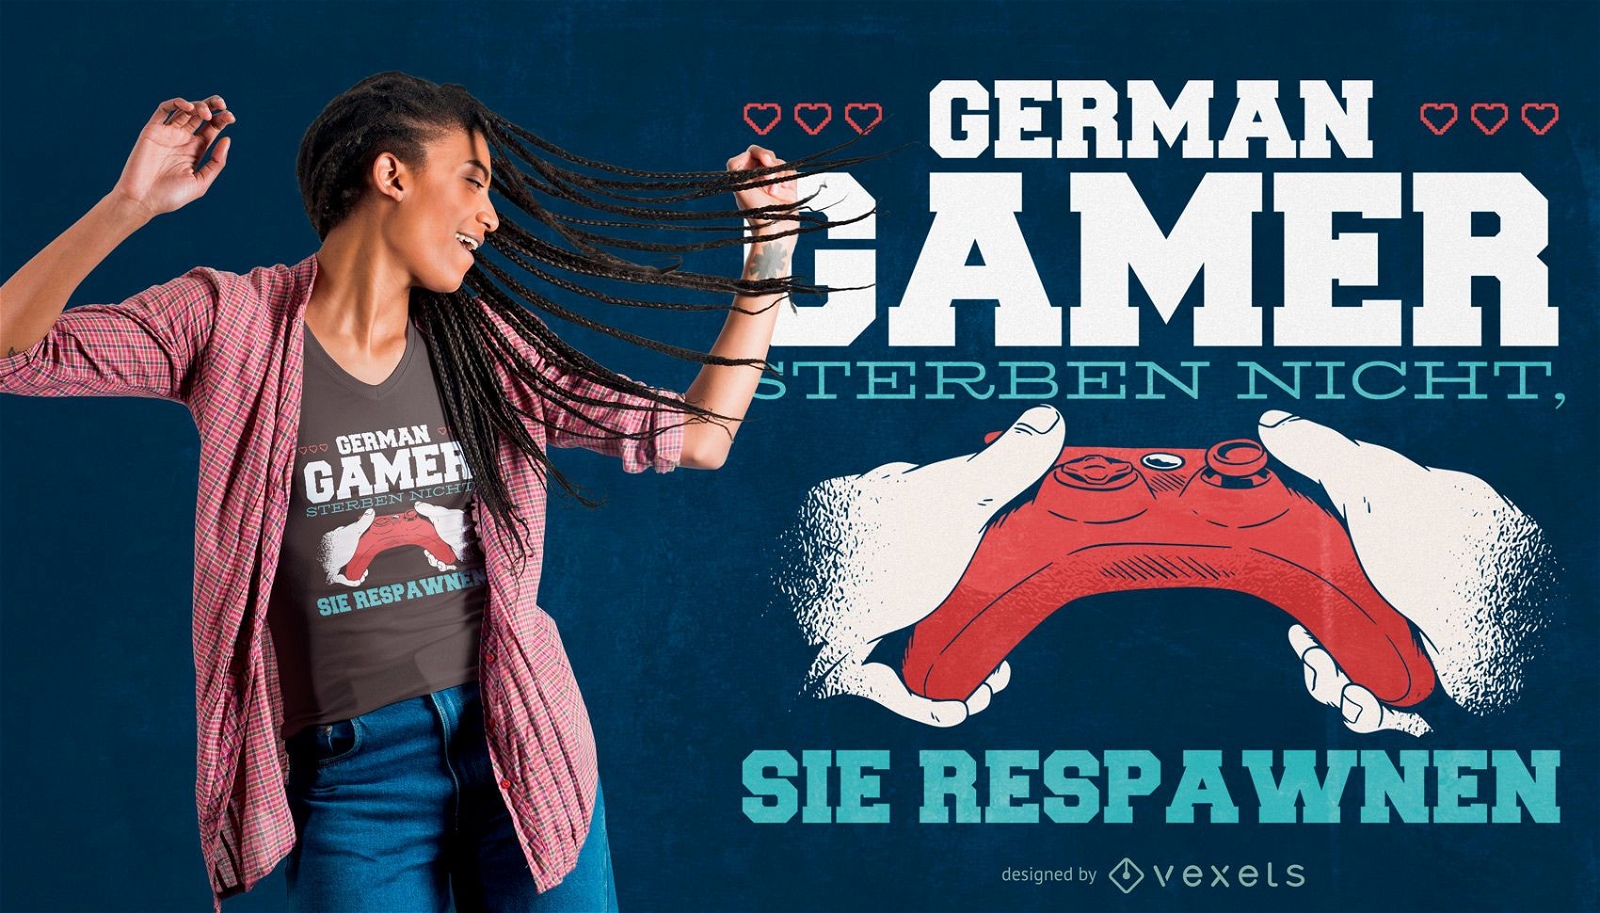 German Gamer Quote T-shirt Design